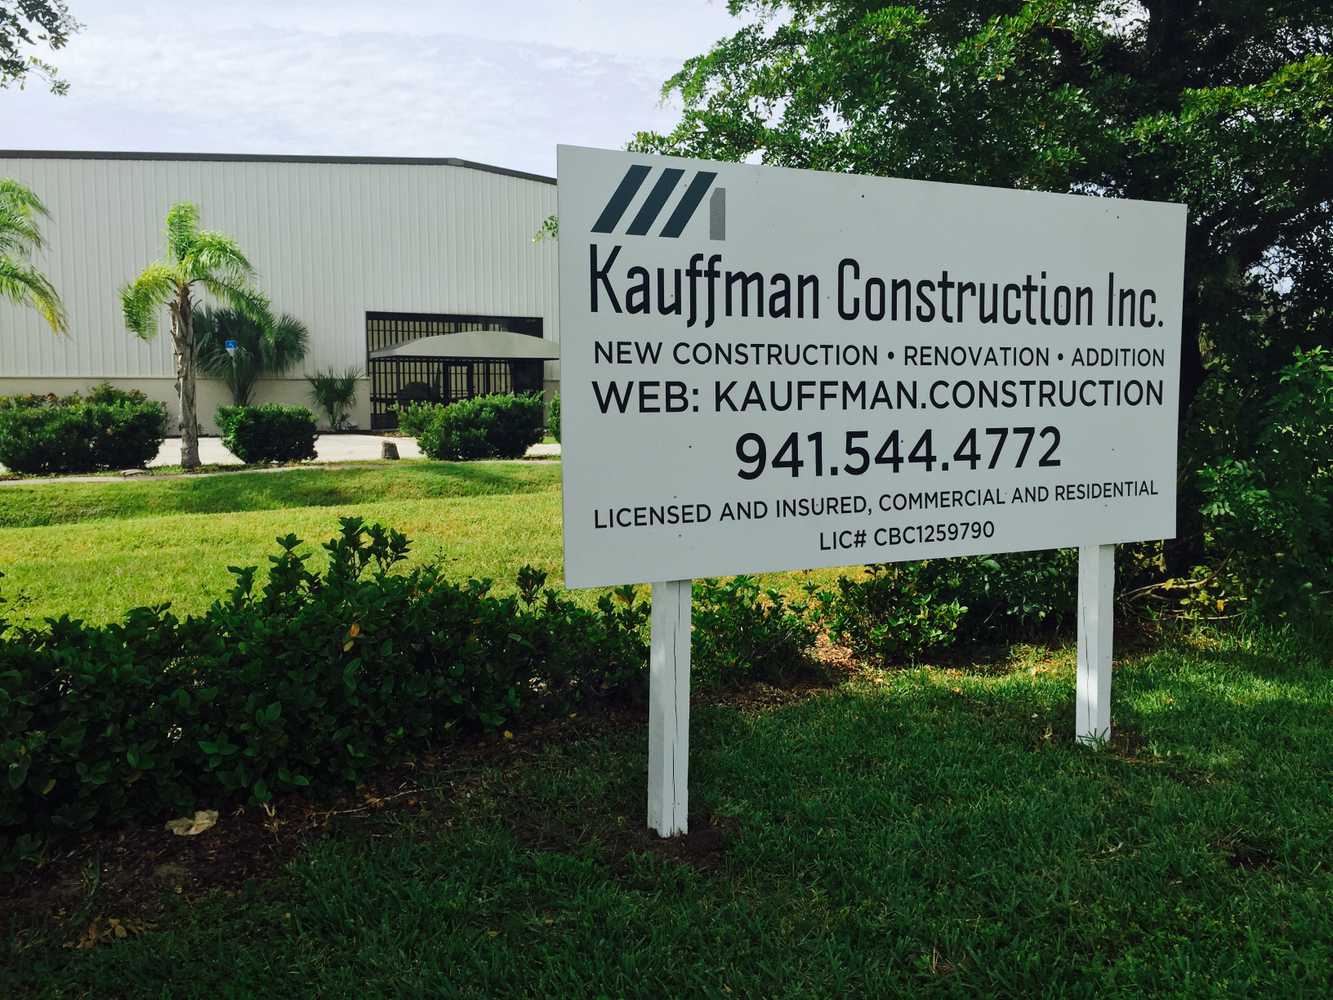 Photos from Kauffman Construction Inc